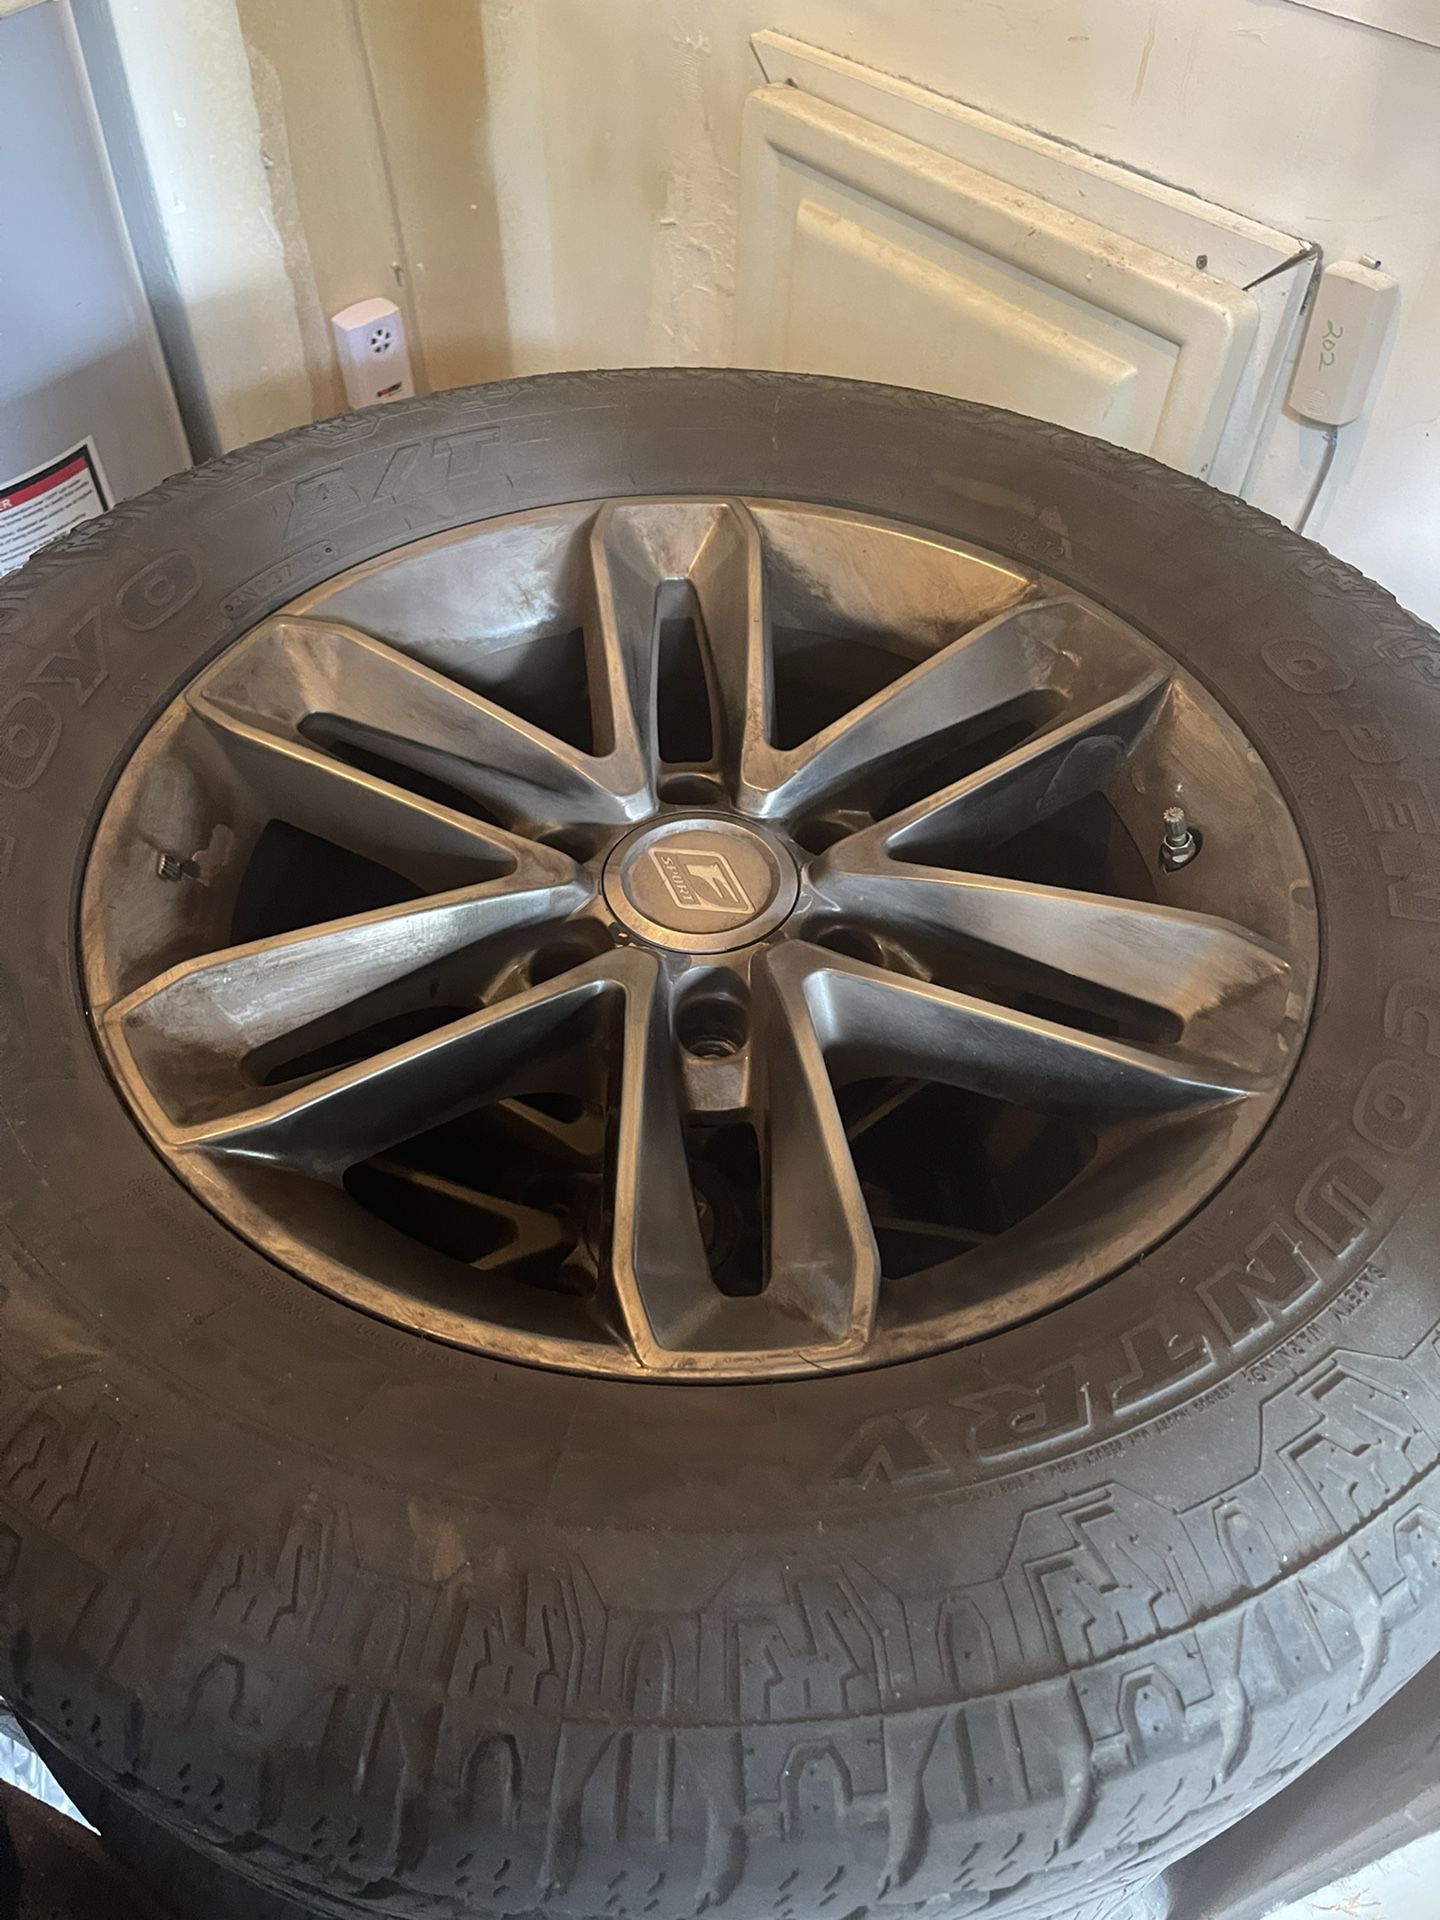 Lexus gx460 F sports wheel set 265 60 R18